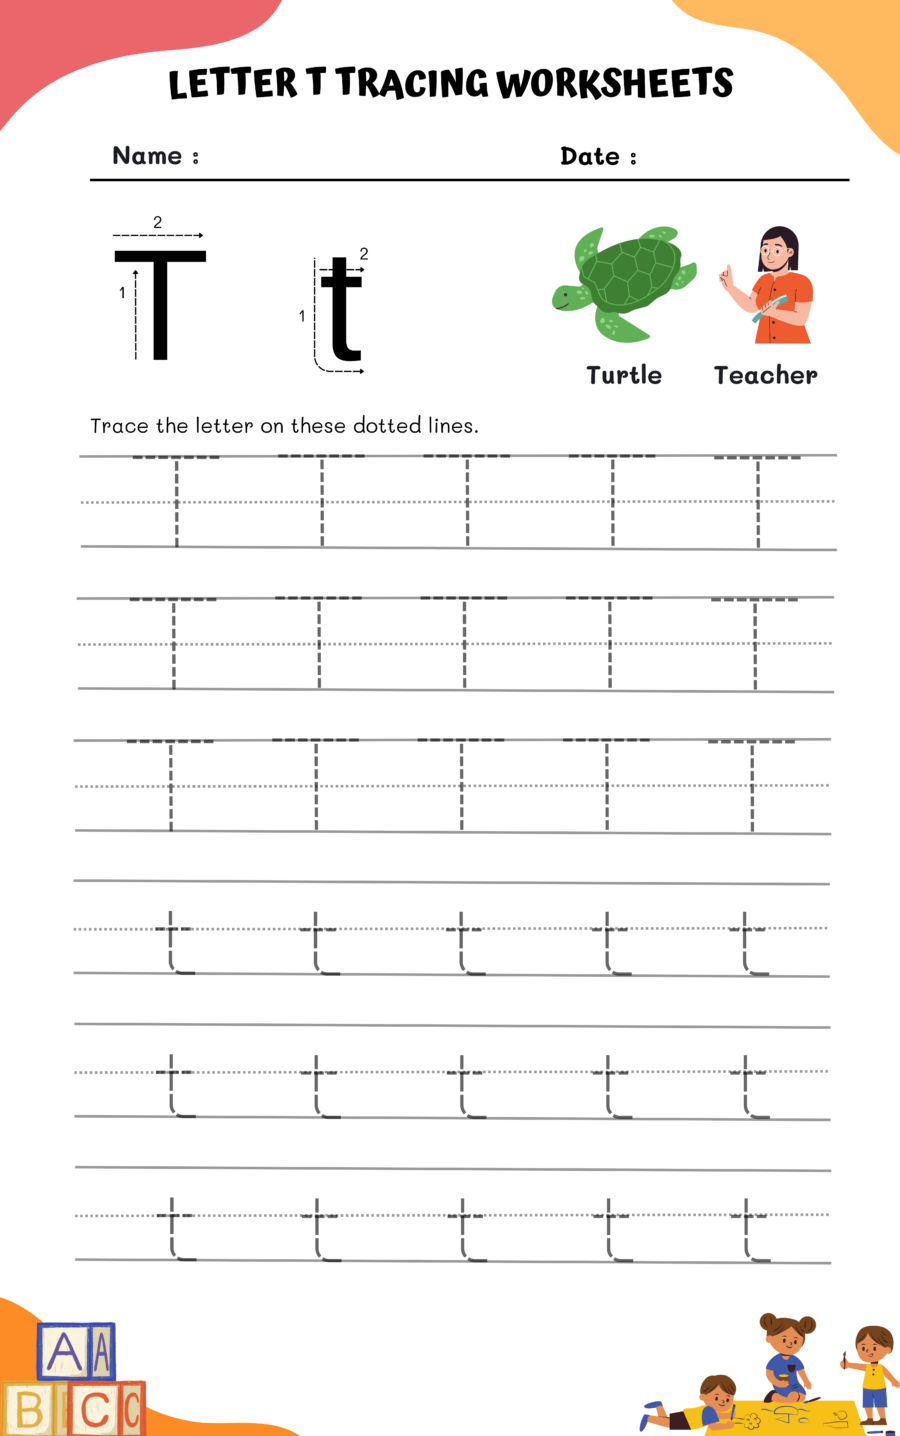 Letter T Tracing Worksheet